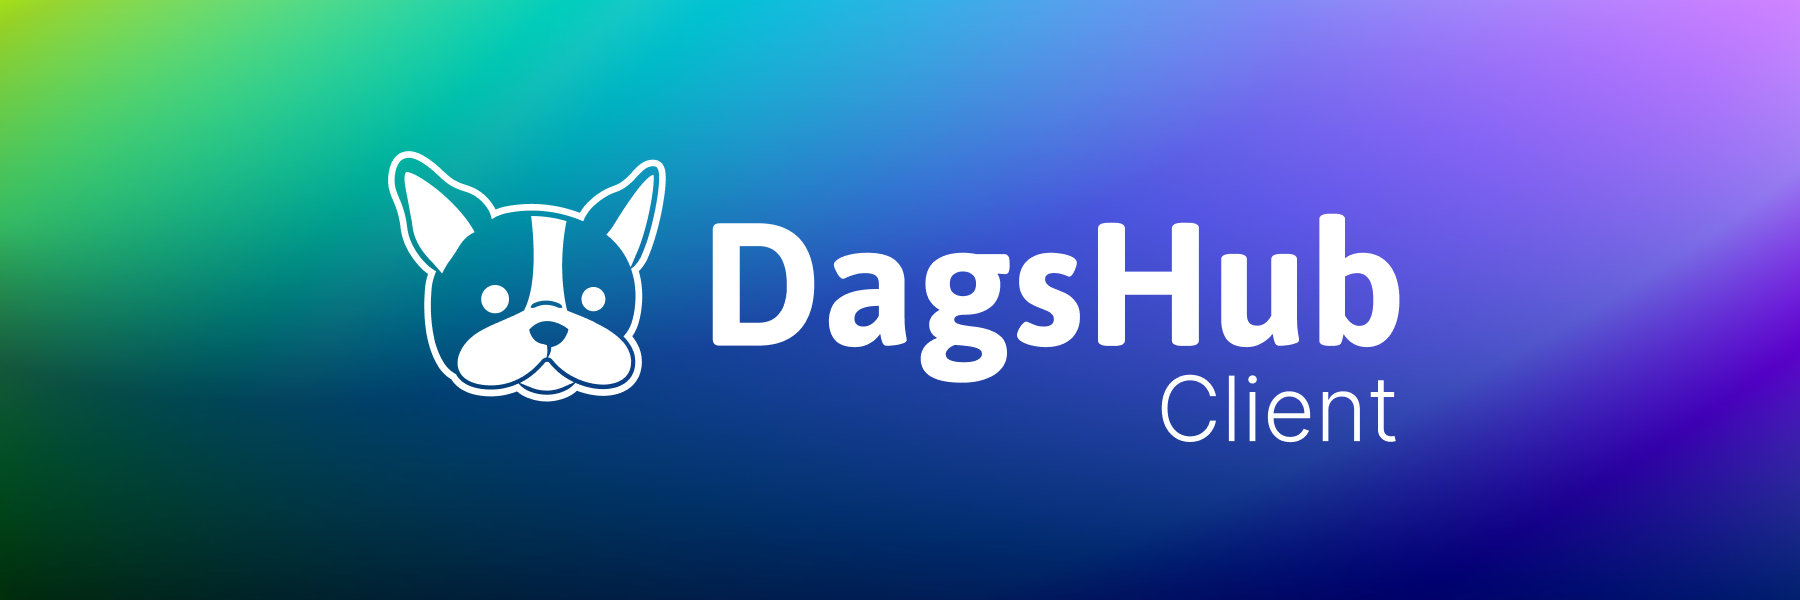 dagshub-logo